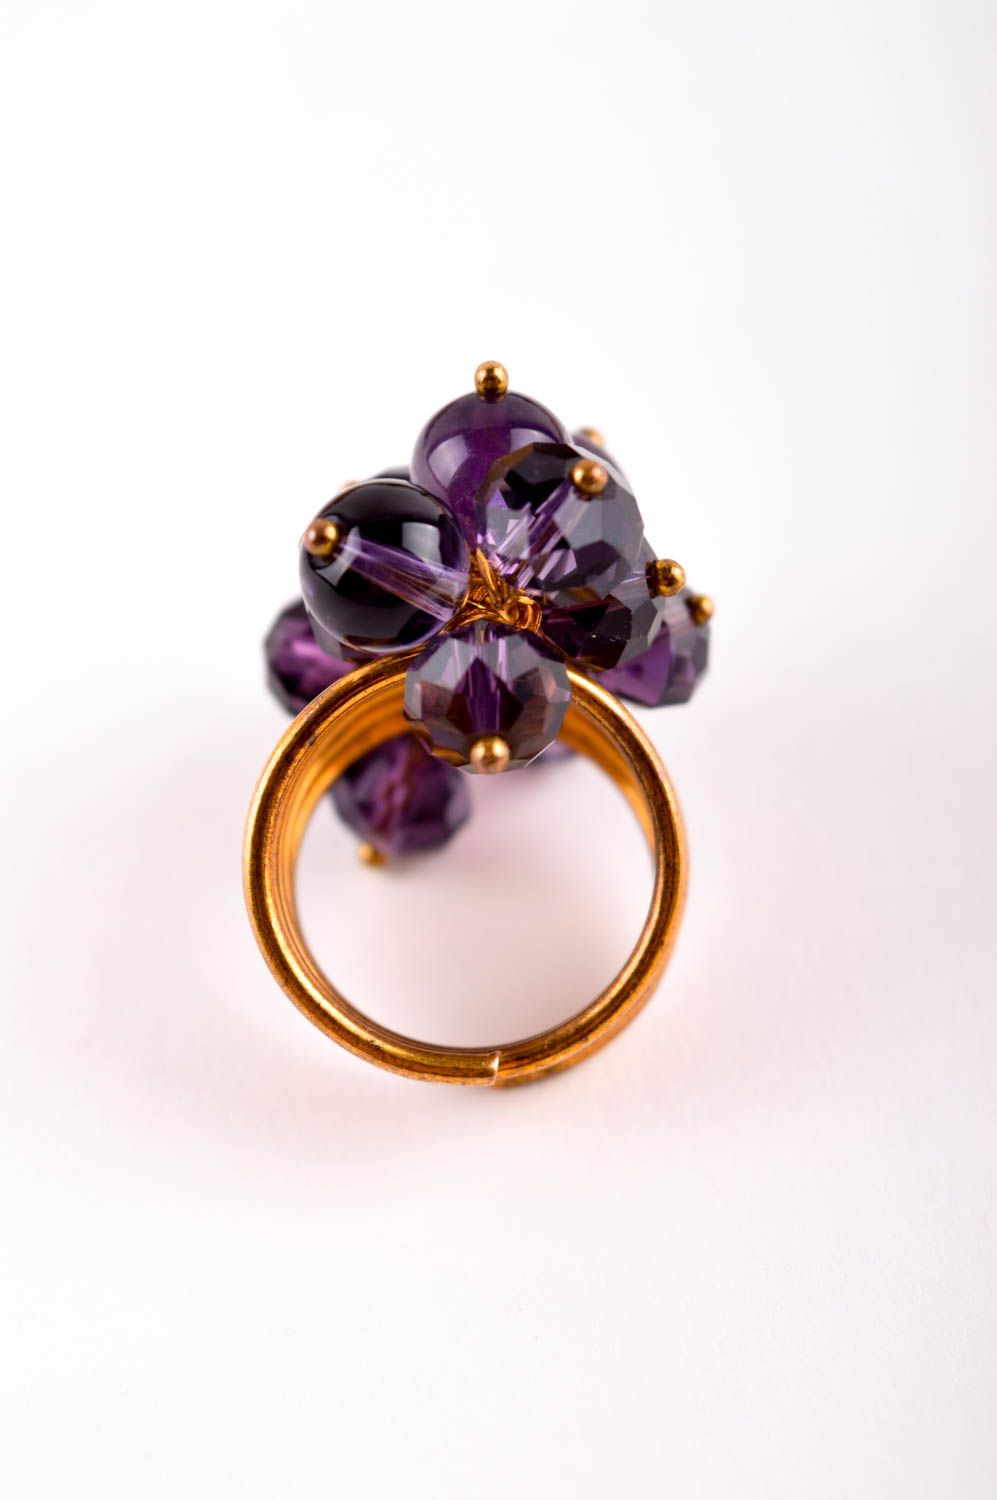 Handmade ring beautiful ring with stones designer accessory unusual jewelry photo 4